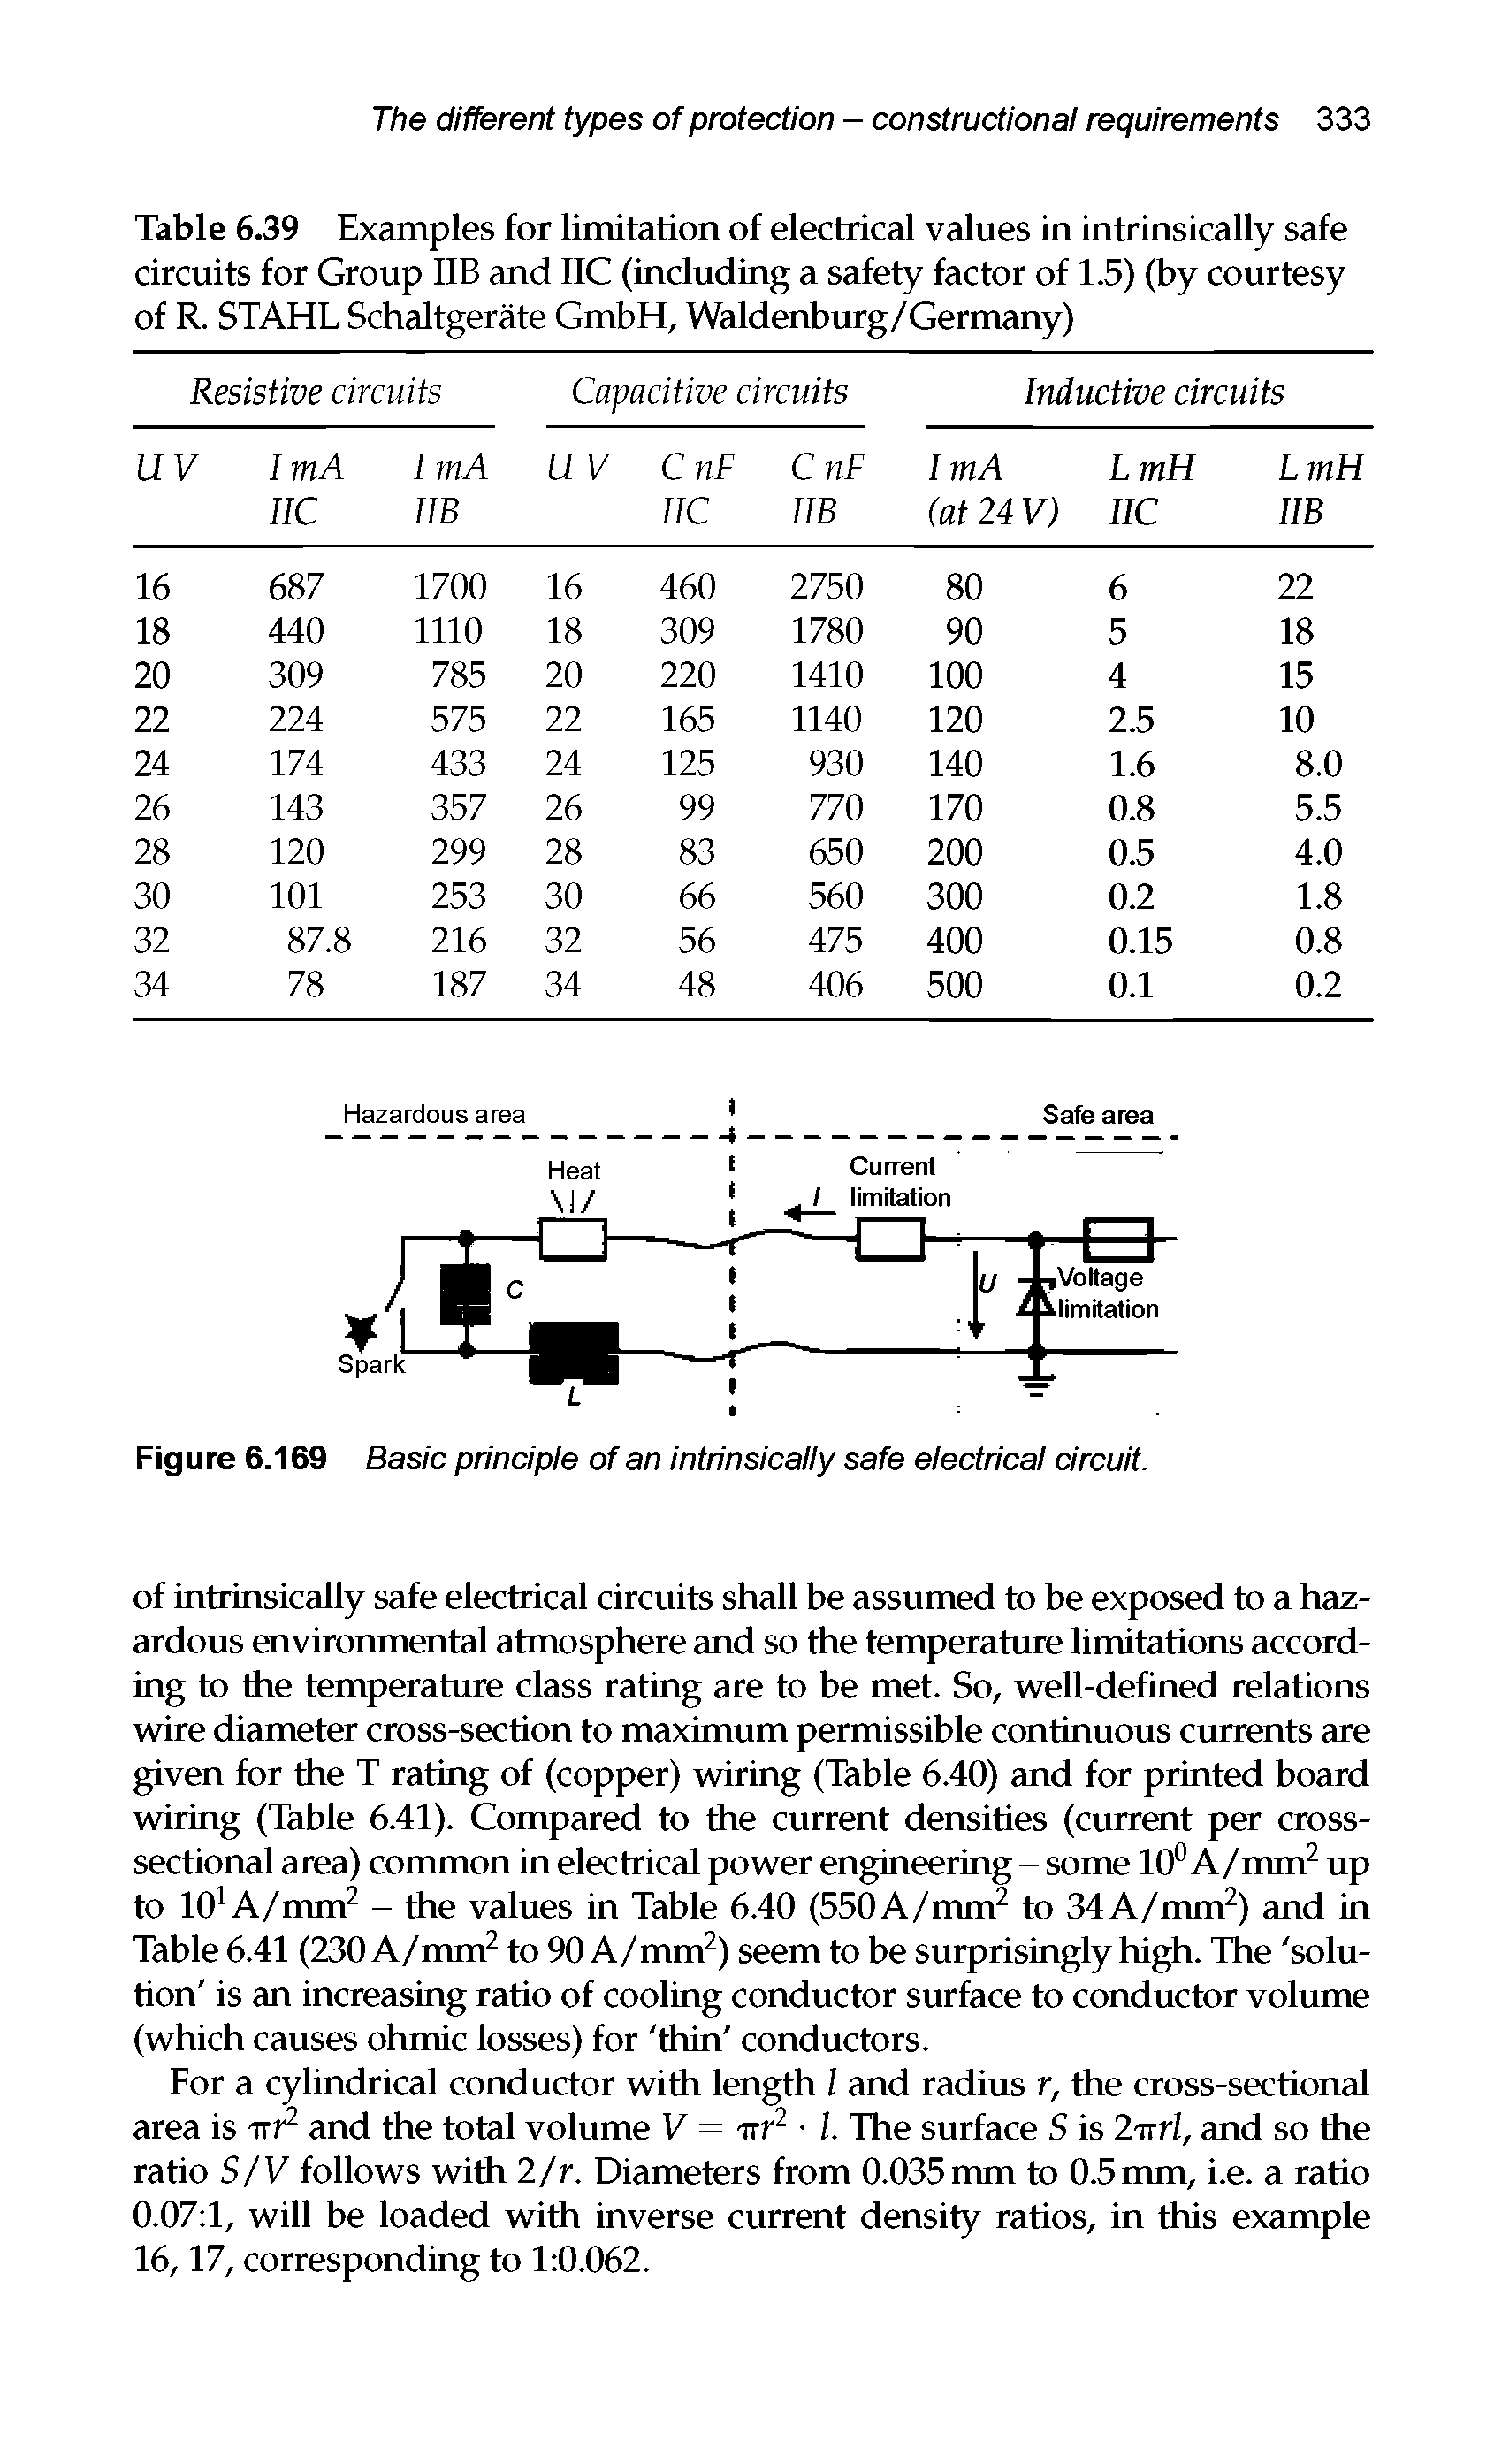 Figure 6.169 Basic principle of an intrinsically safe electrical circuit.